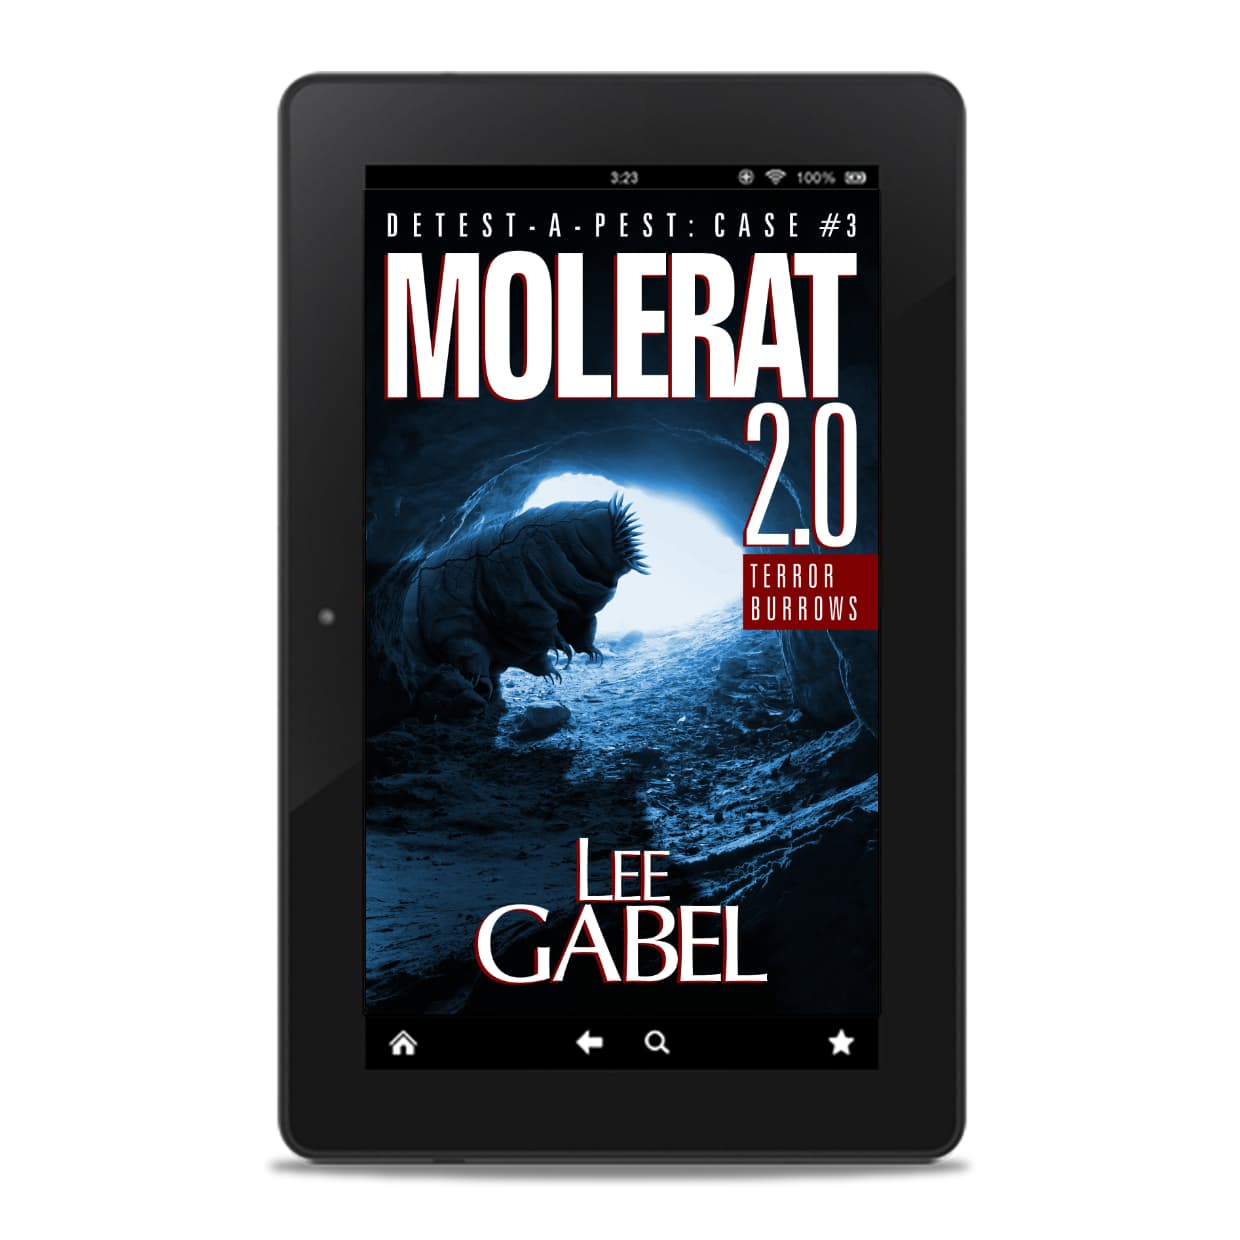 E-book cover of Molerat 2.0 displayed on an e-reader.